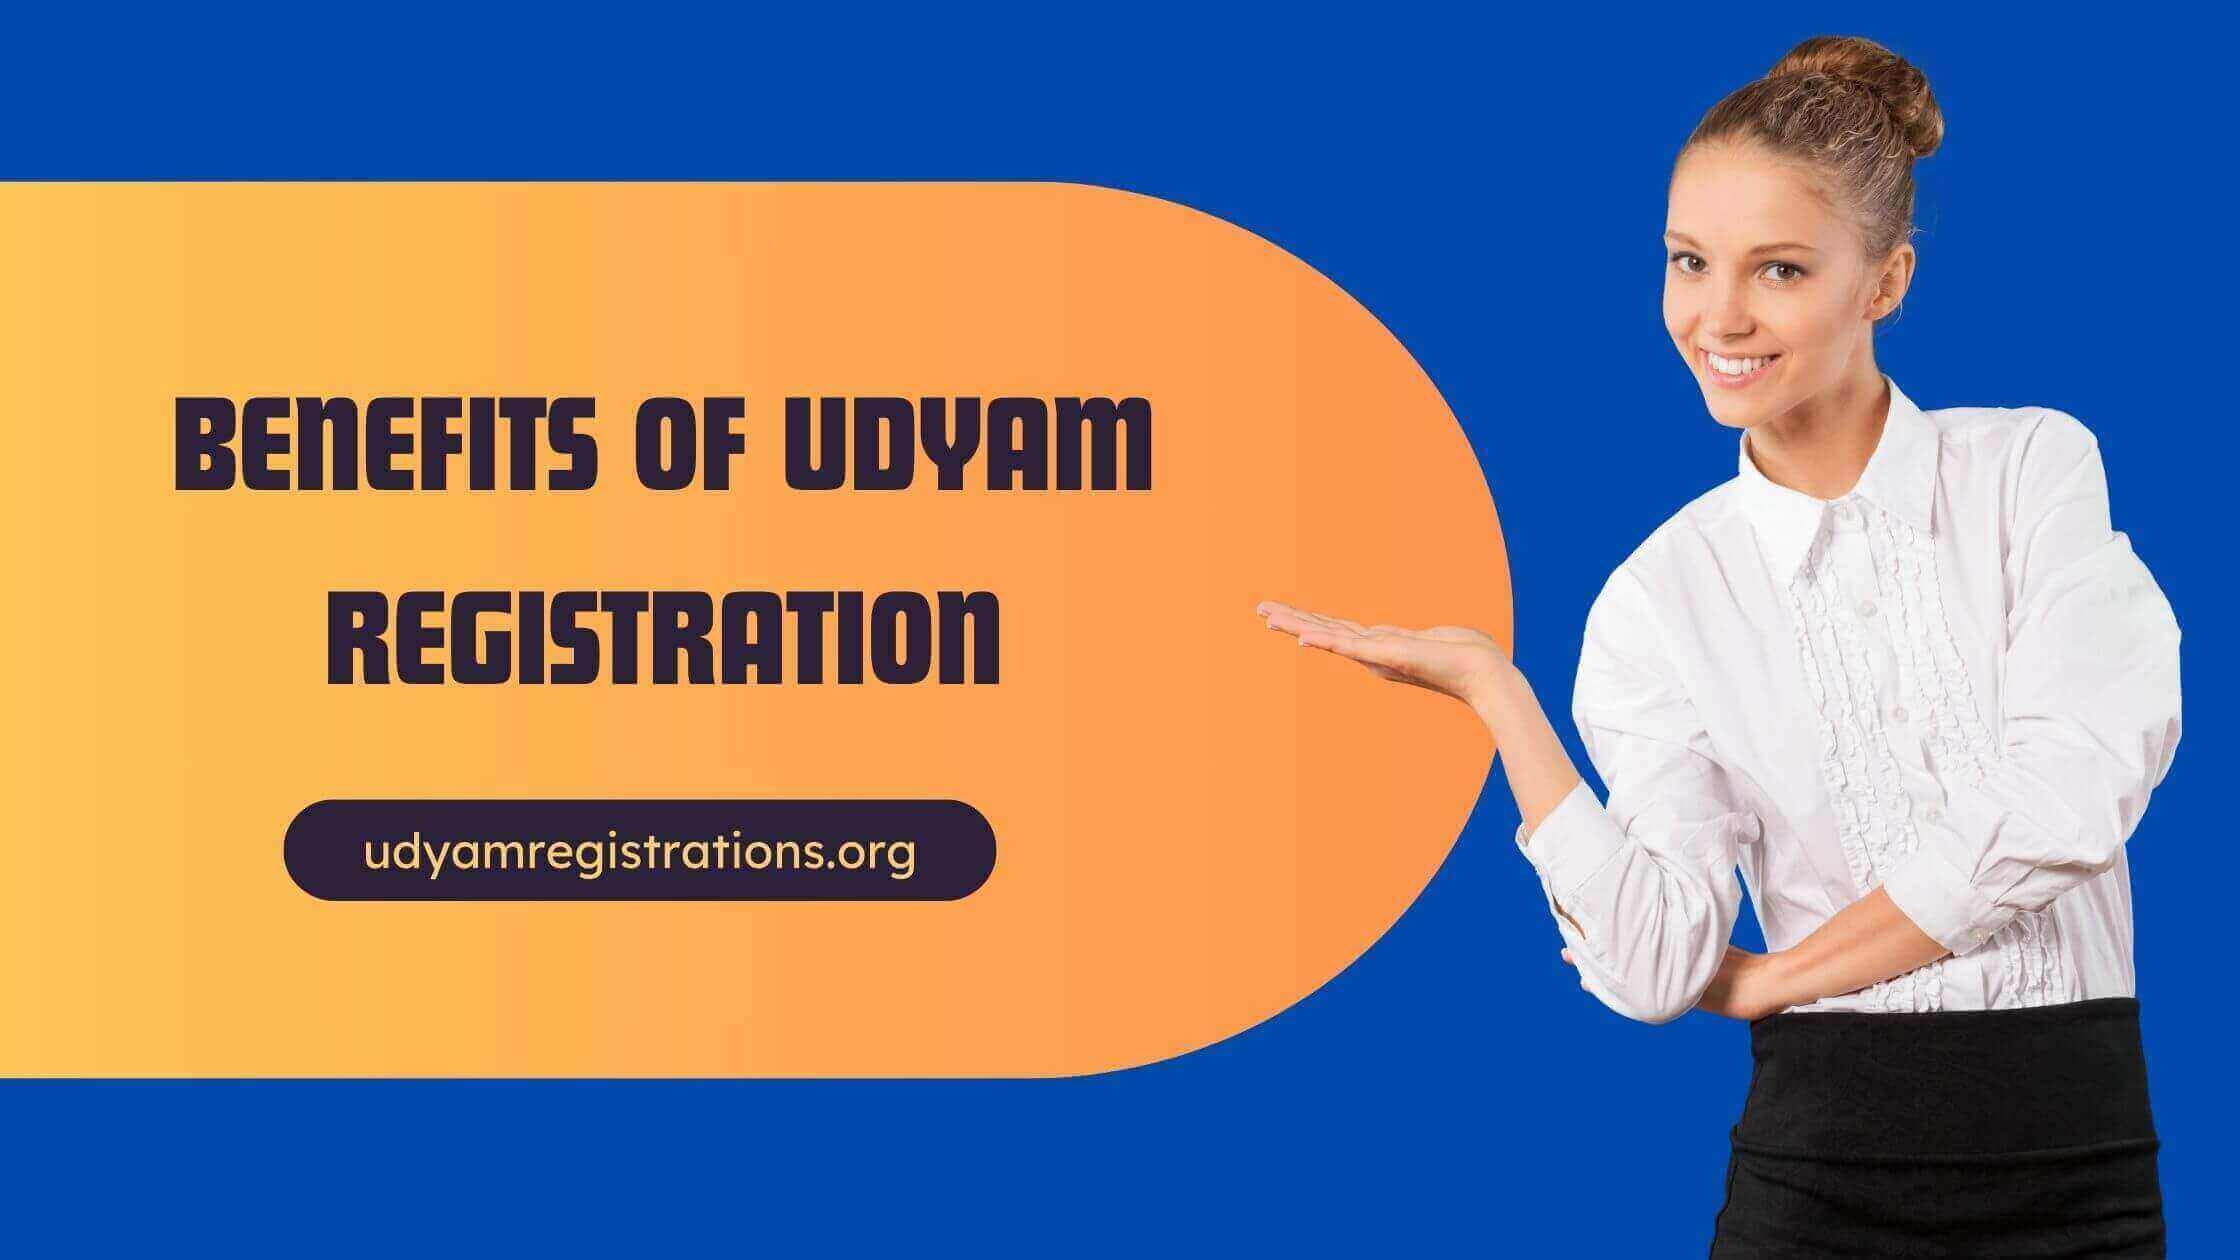 Benefits of udyam registration